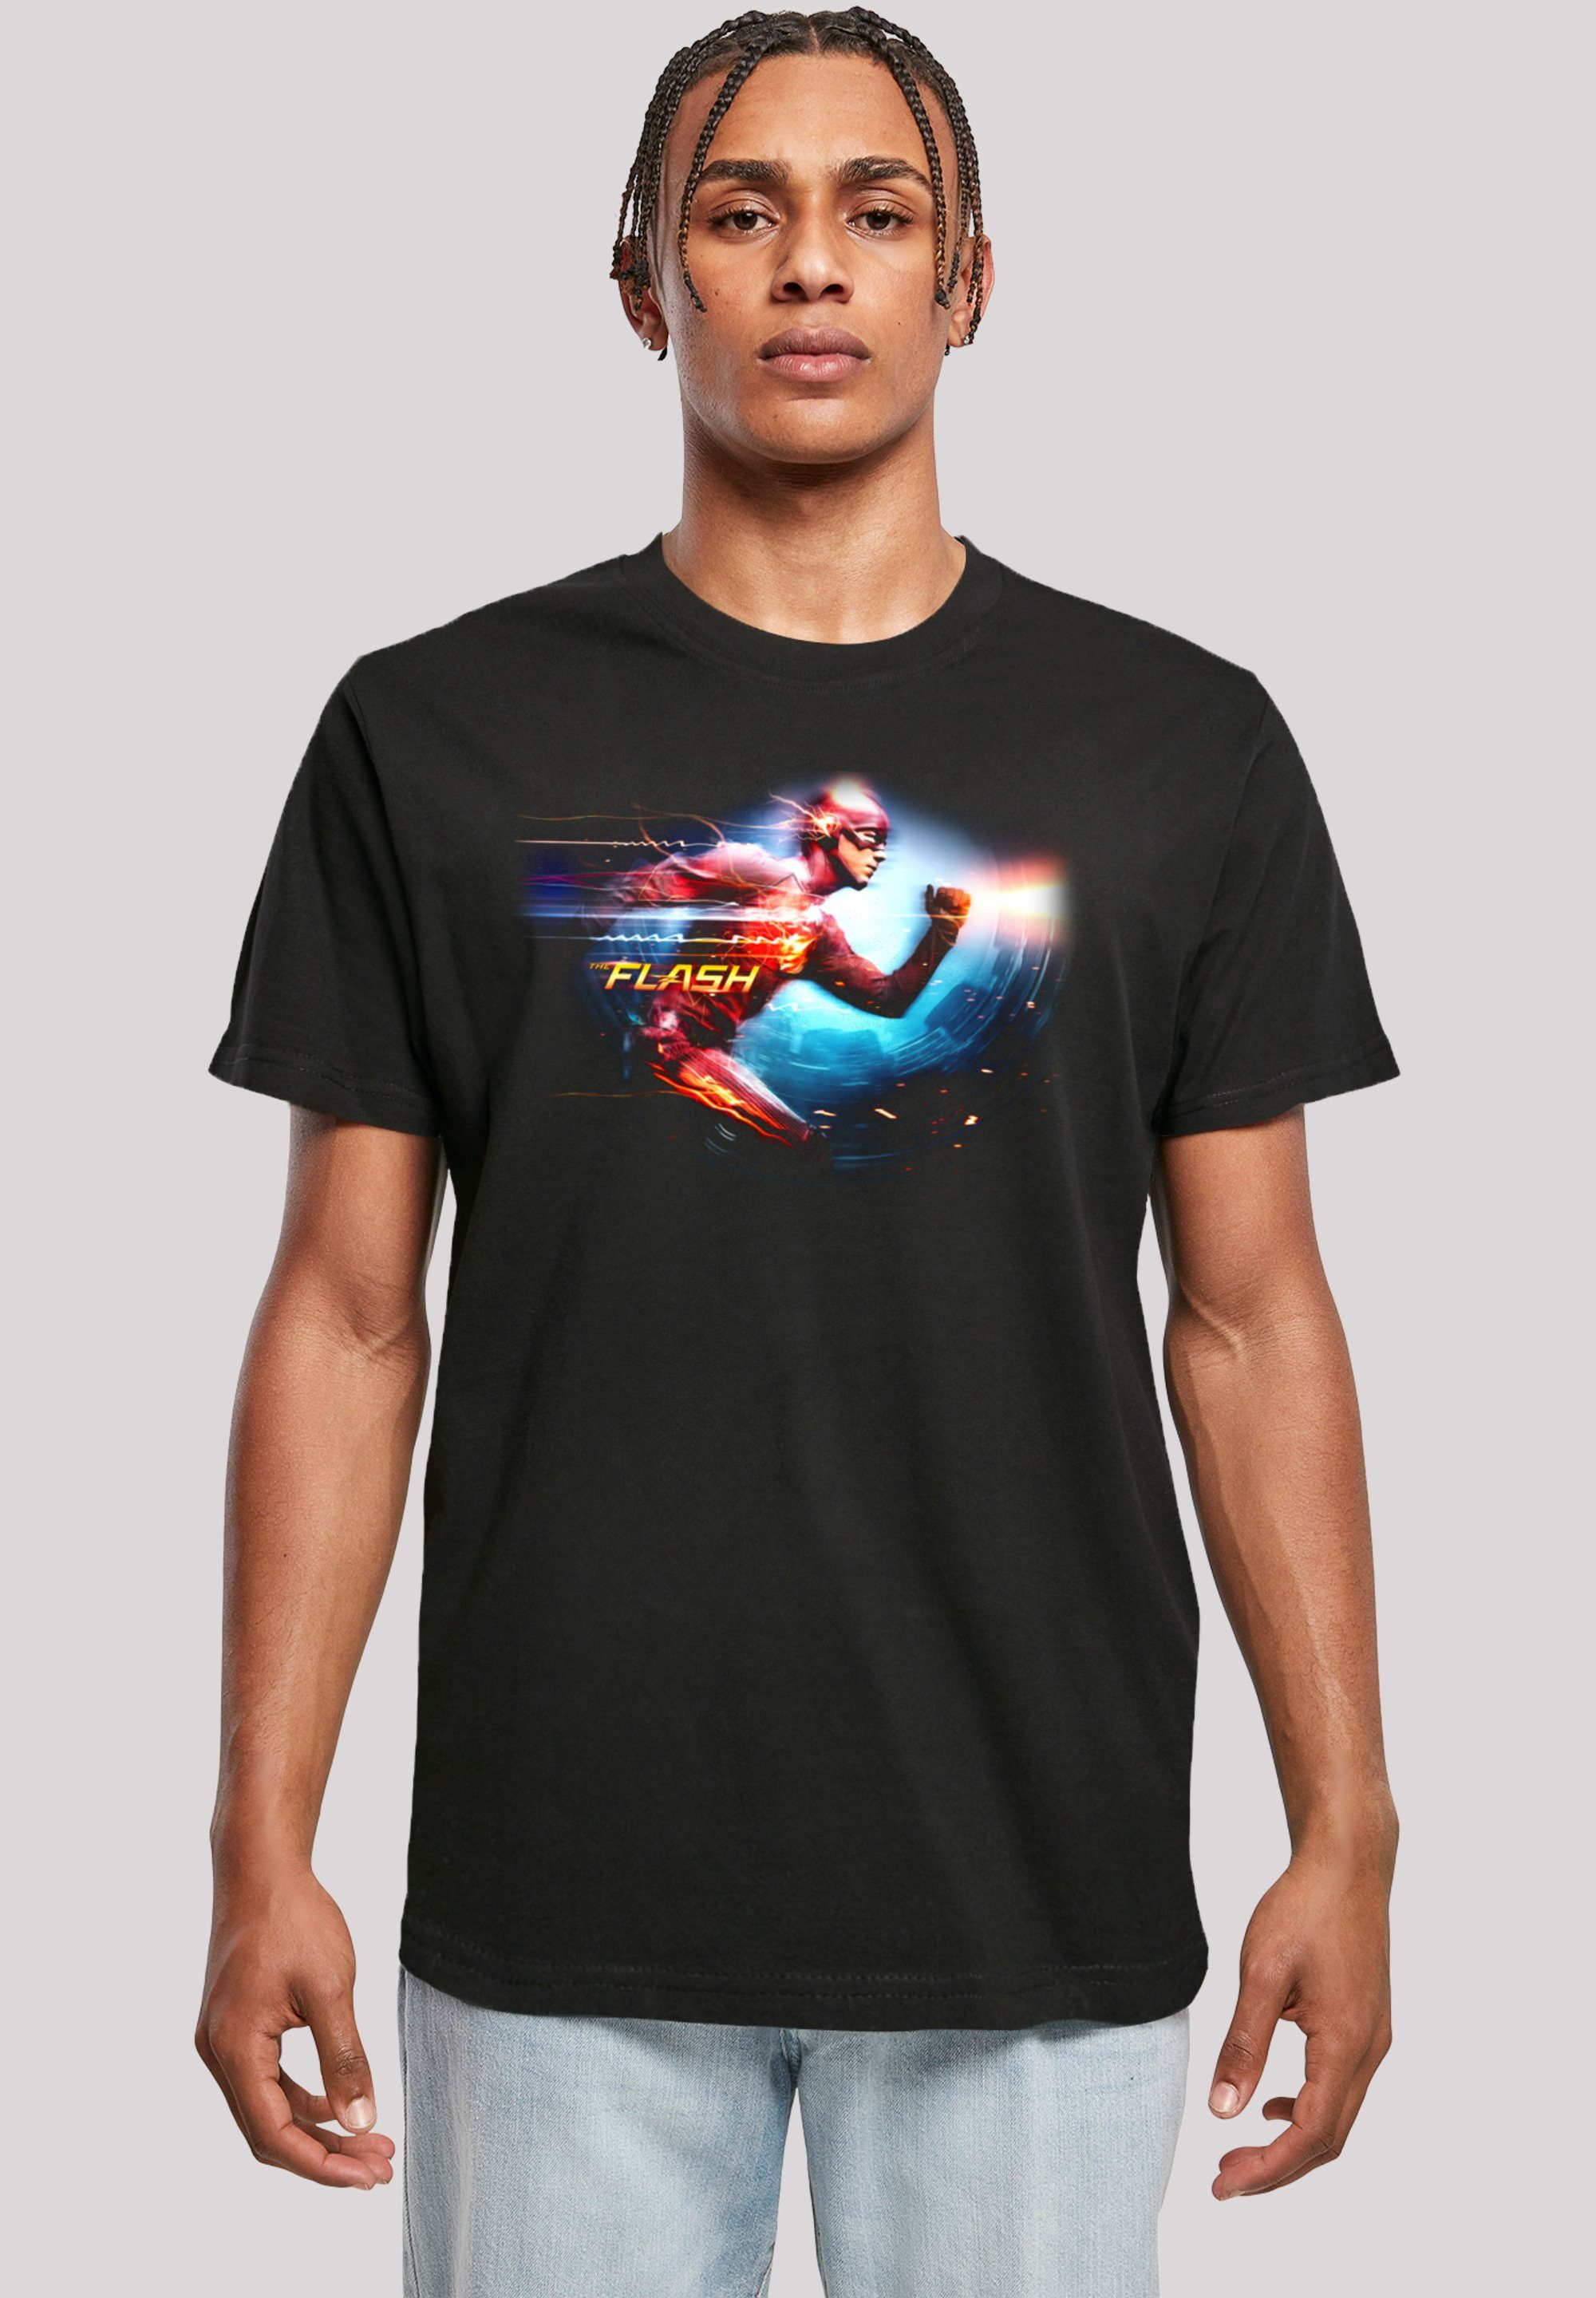 Sparks The Print T-Shirt Comics Flash DC F4NT4STIC